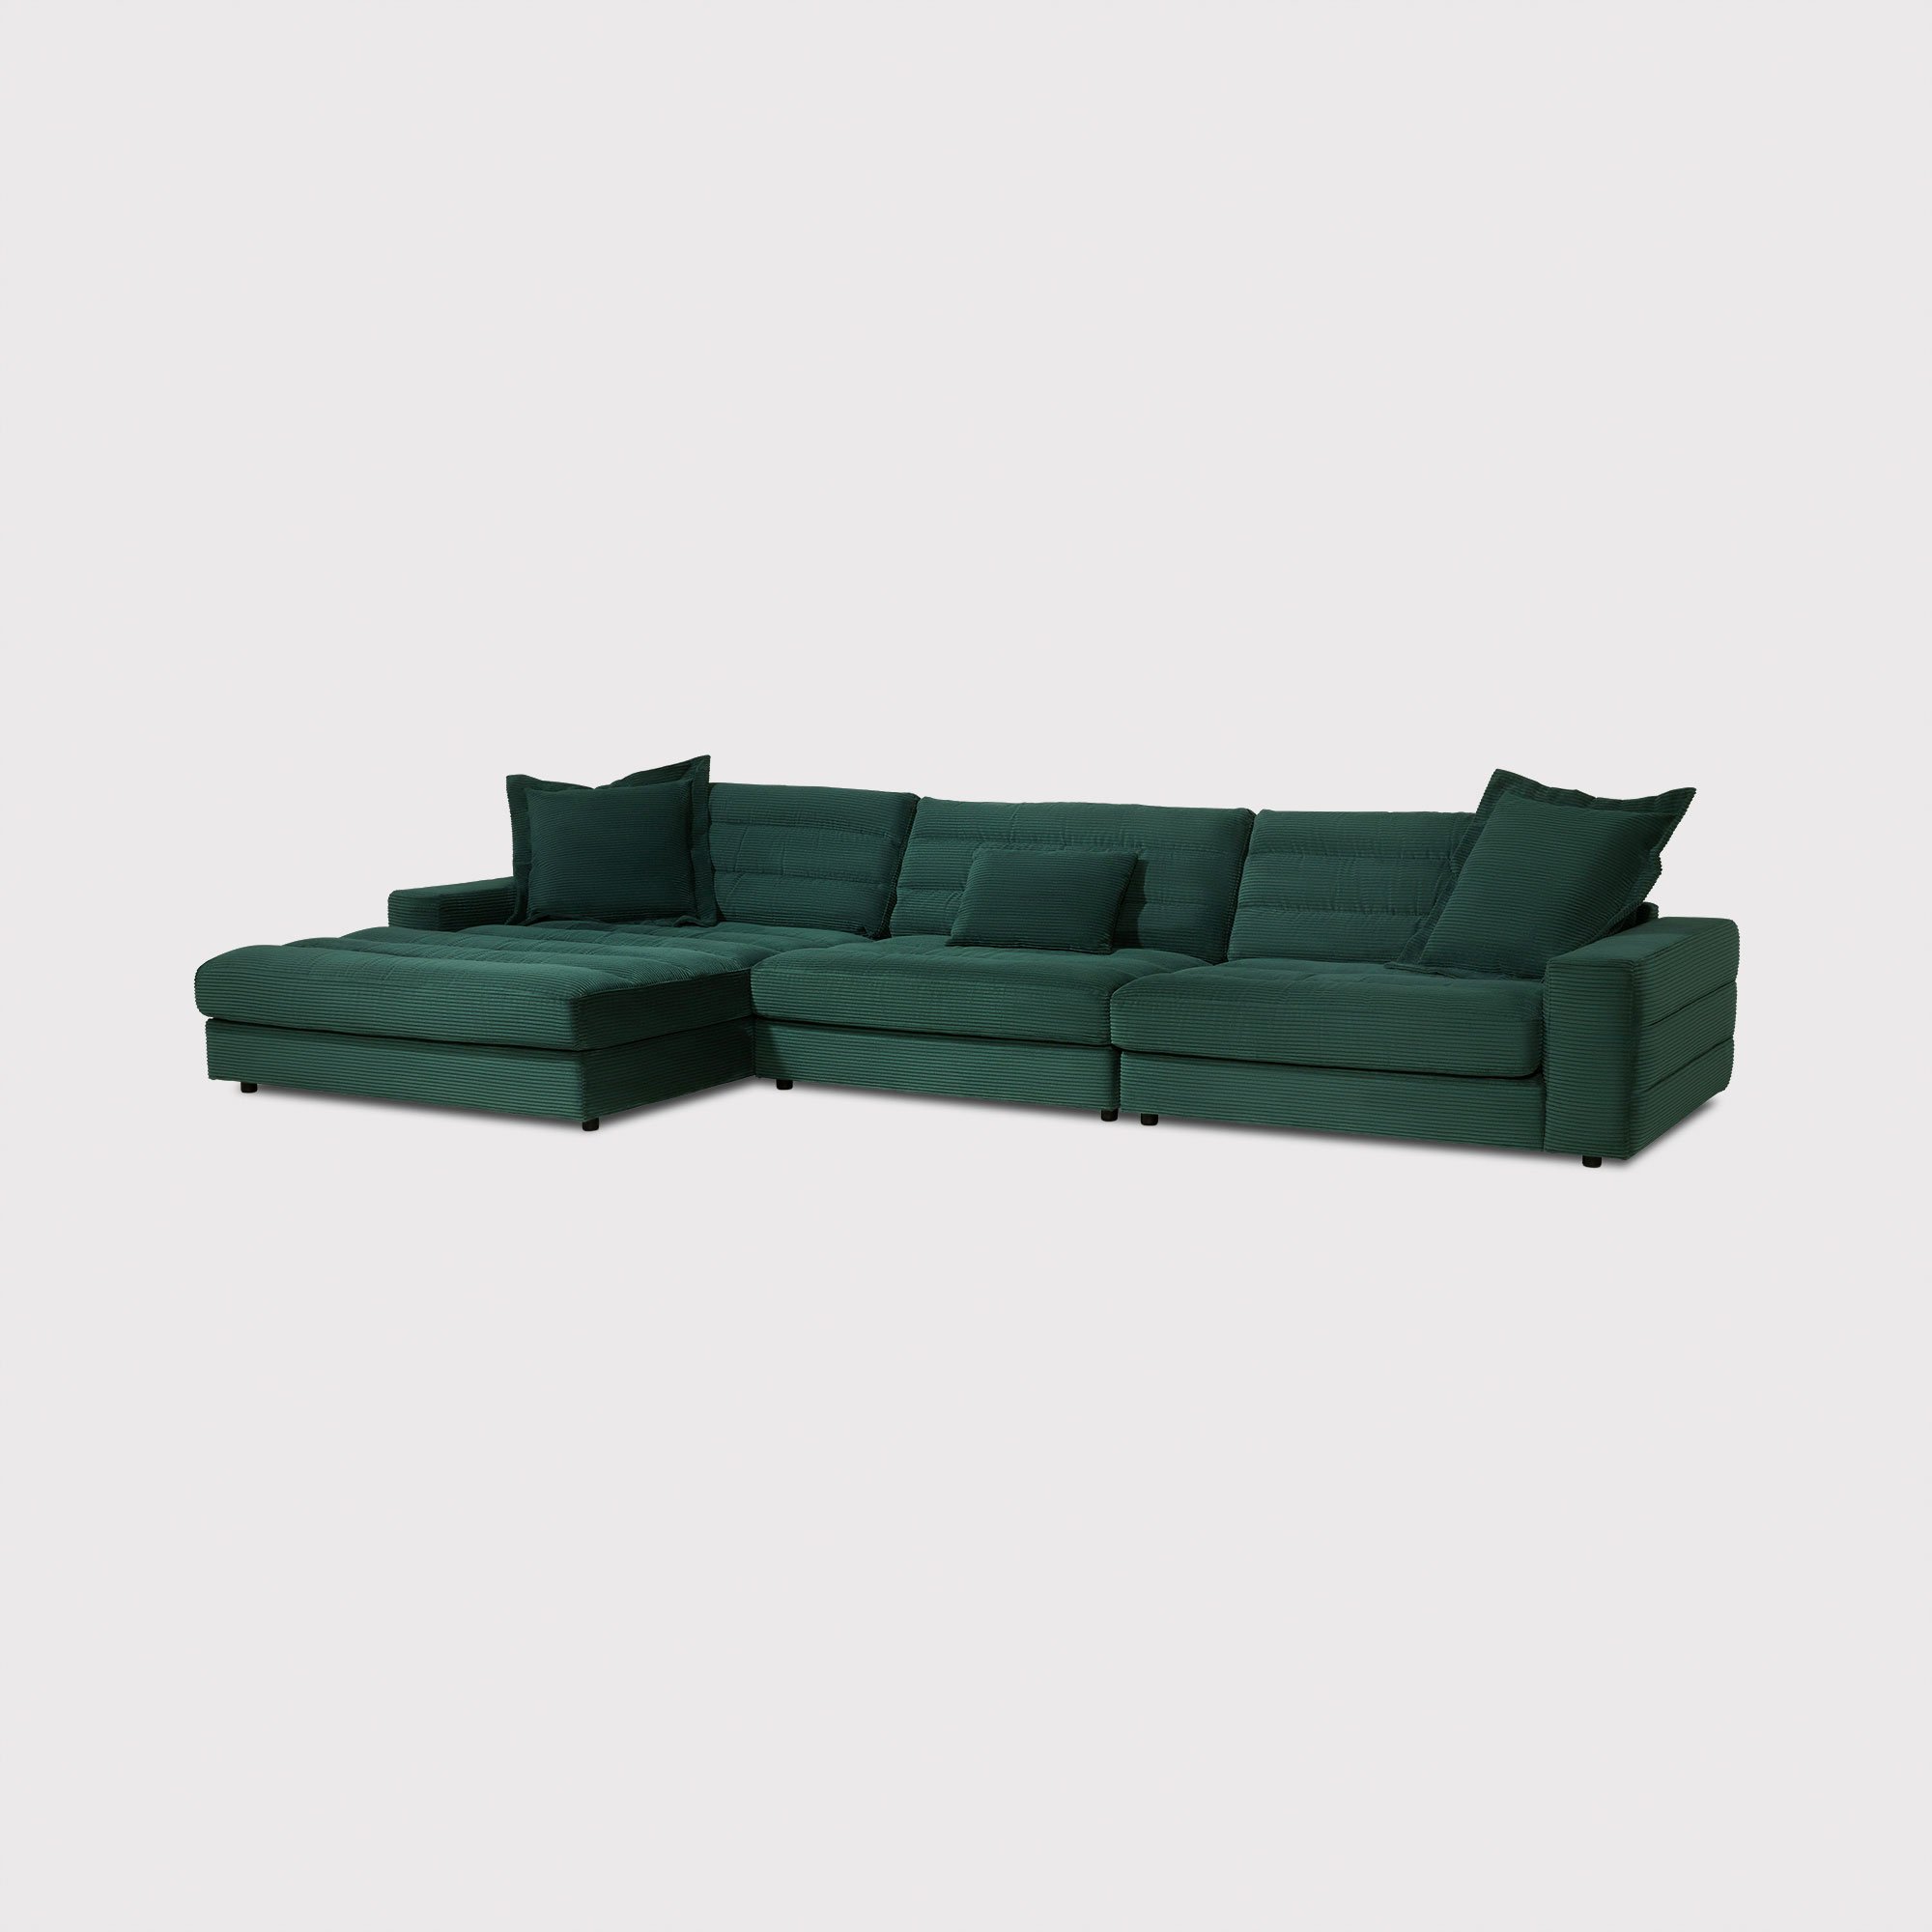 Twain Large Chaise Sofa Left, Green Fabric | Barker & Stonehouse